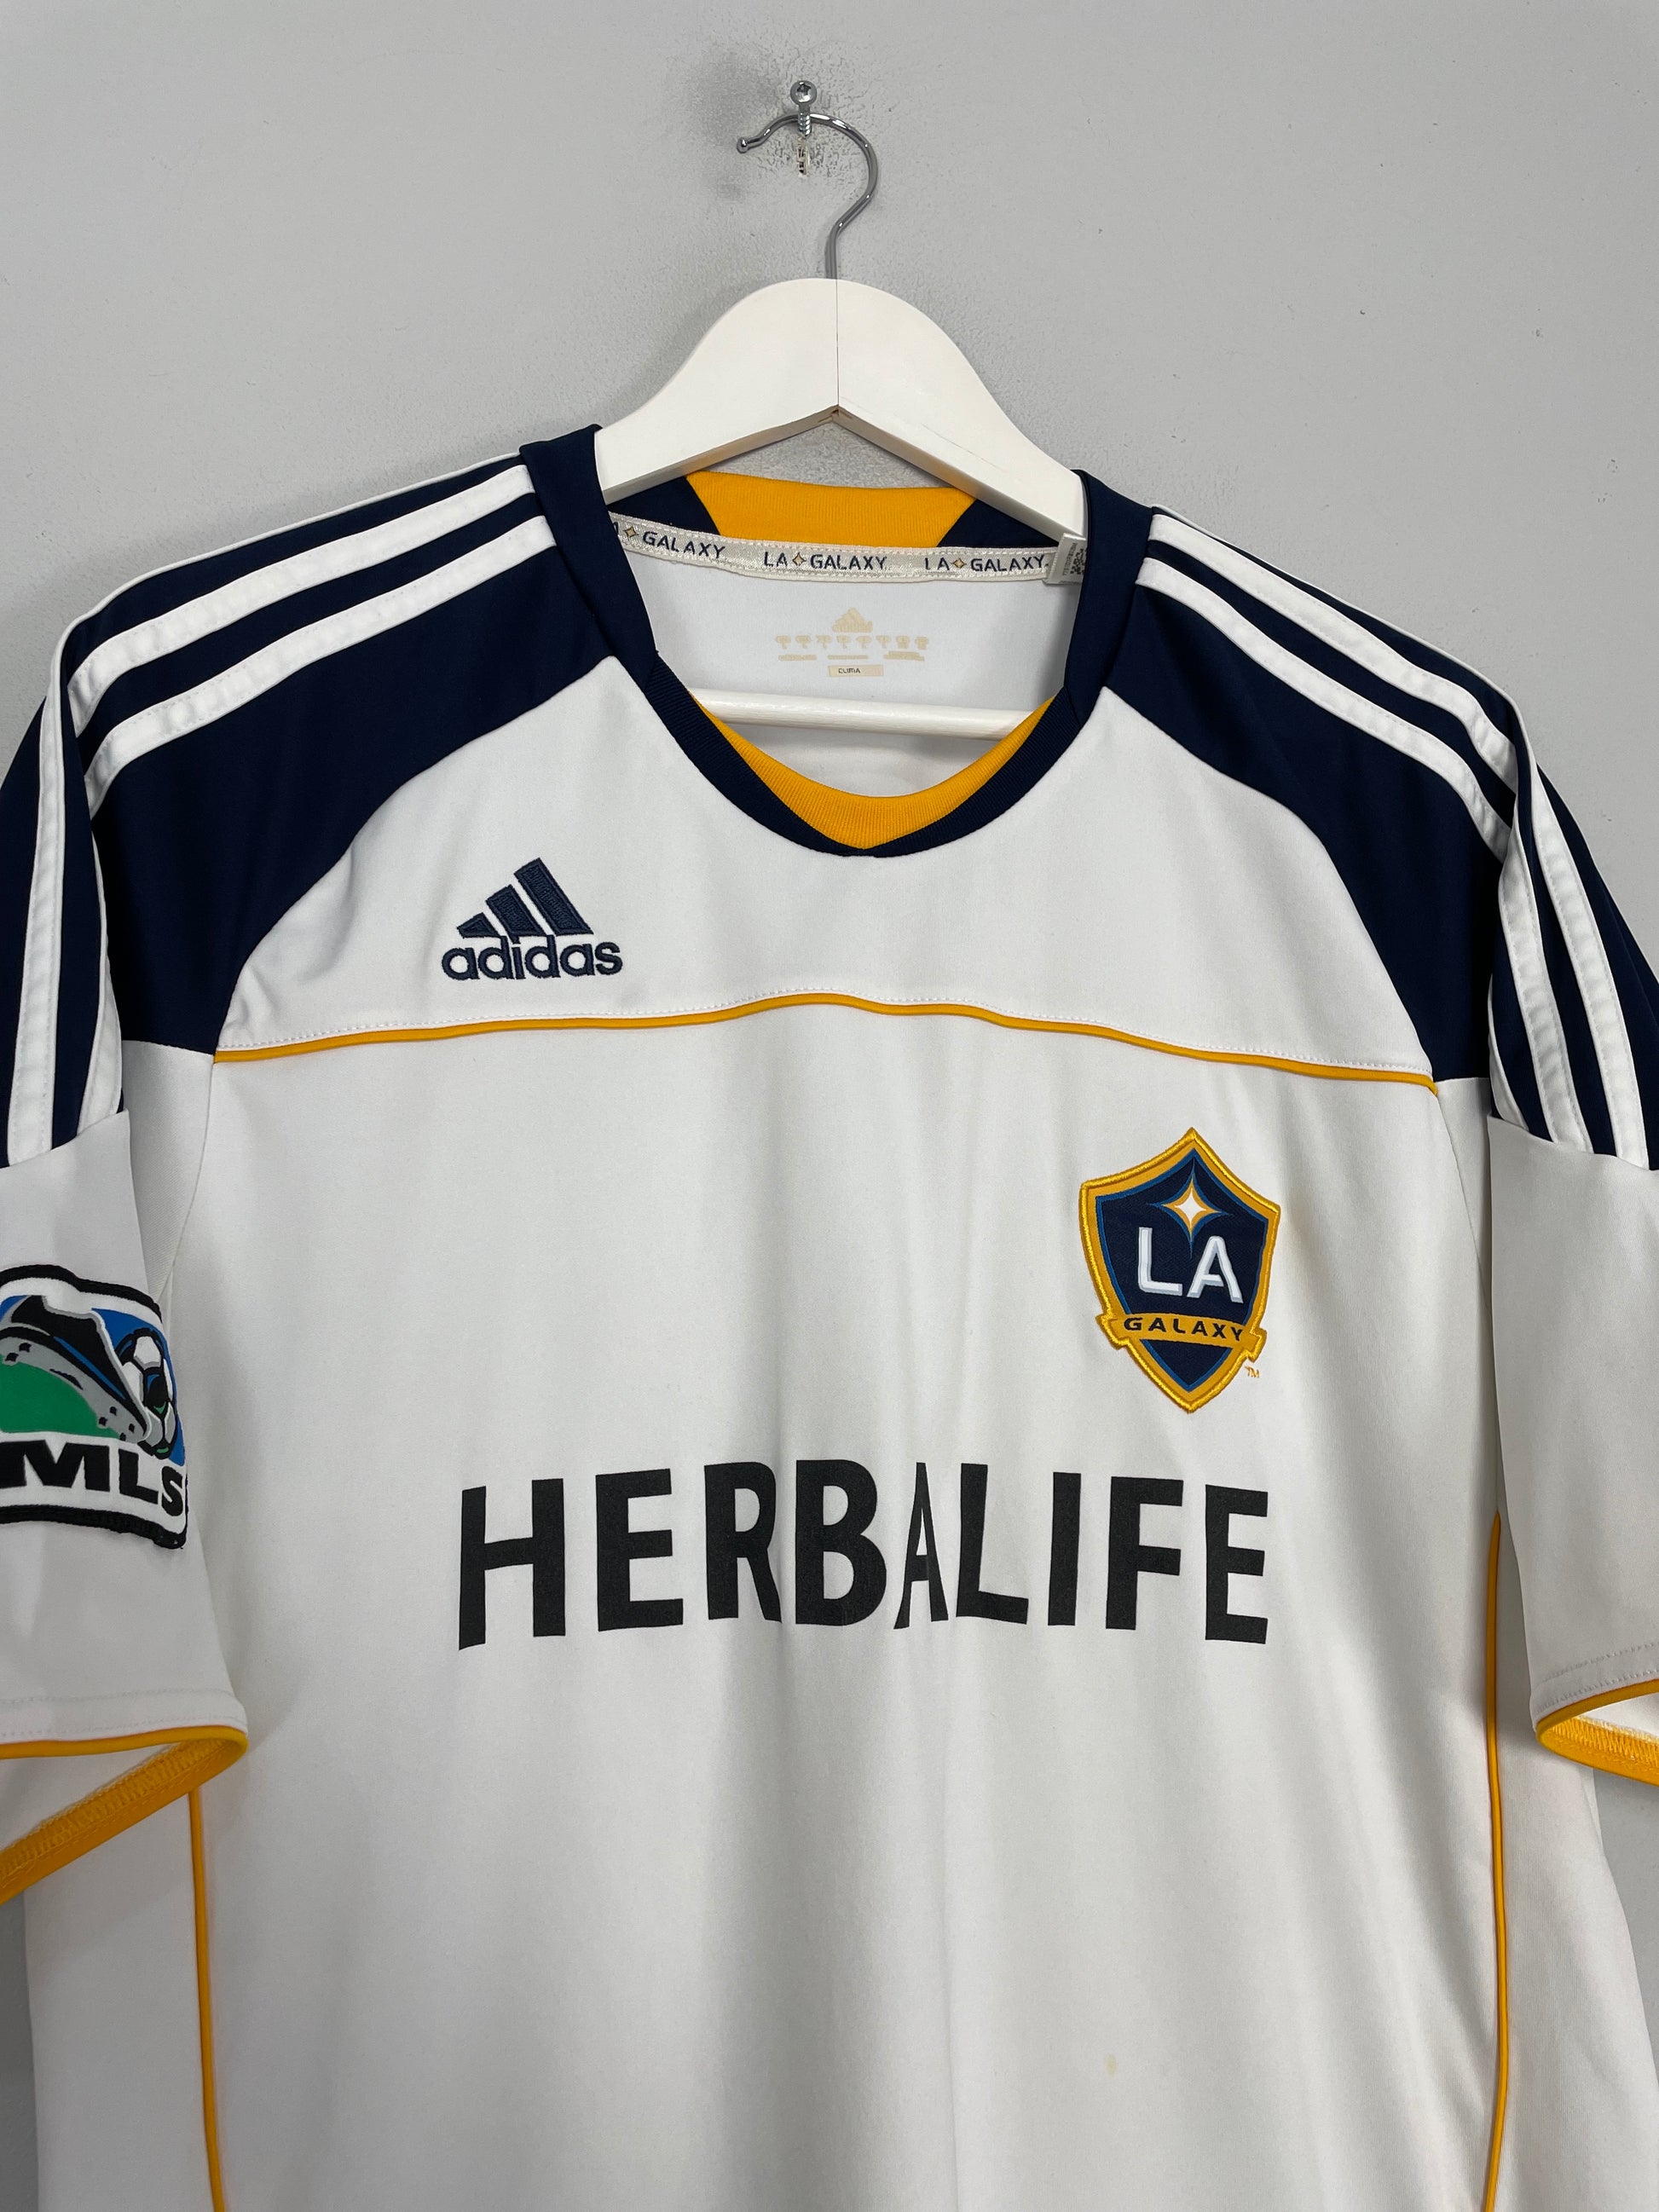 Los Angeles Galaxy Home football shirt 2010 - 2011. Sponsored by